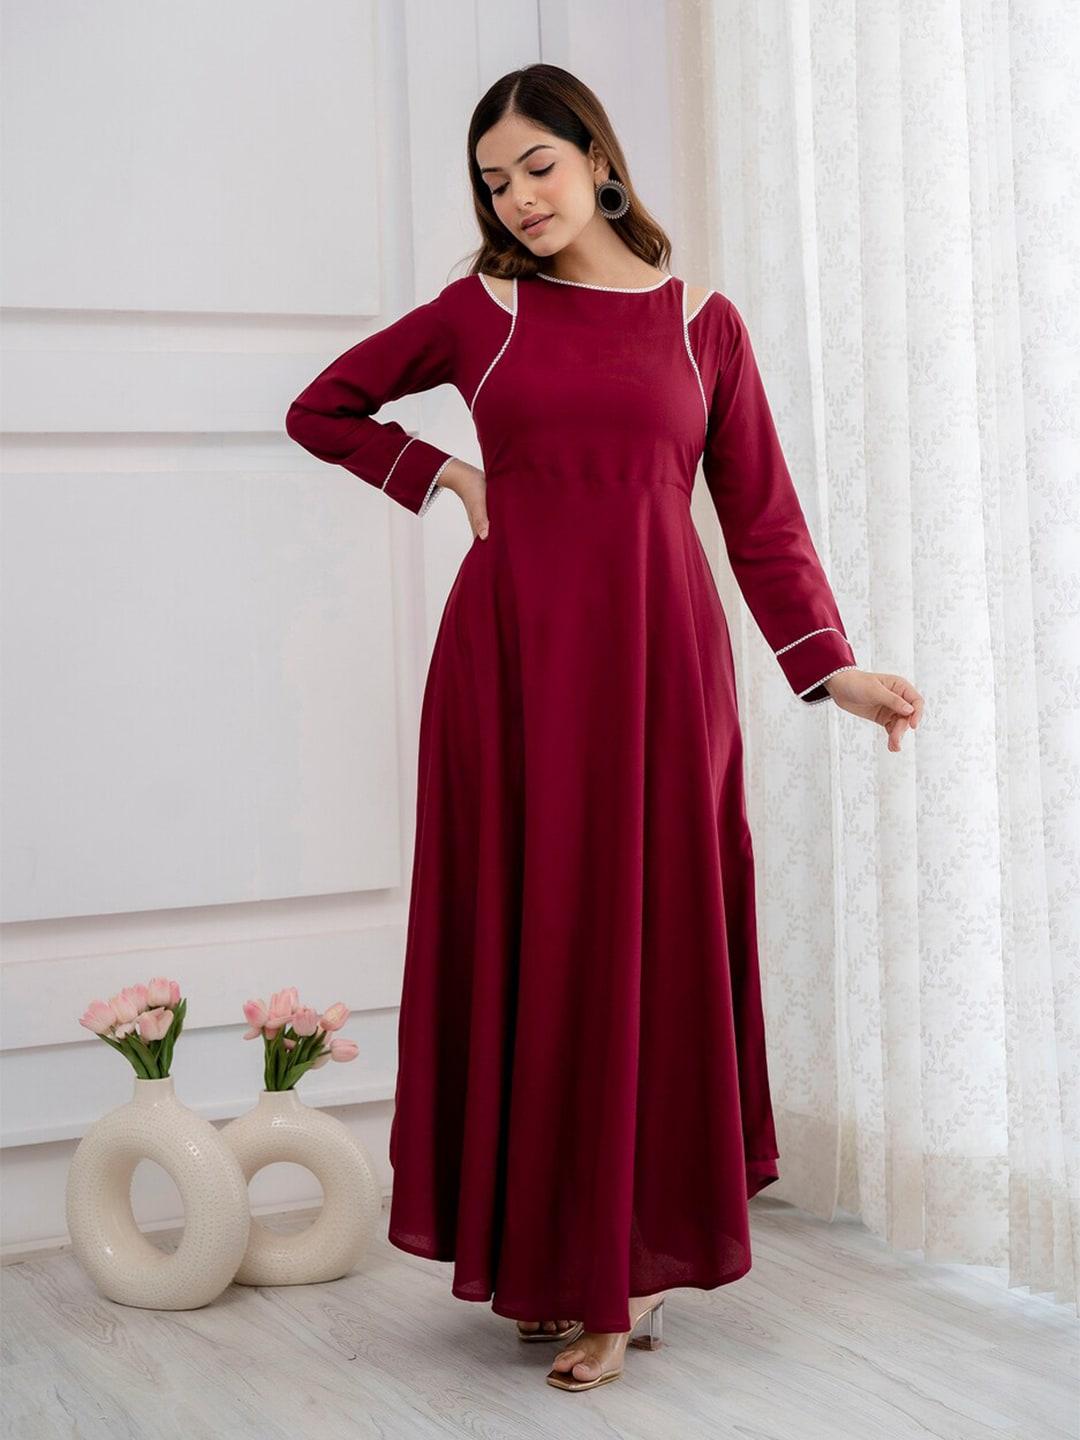 purshottam-wala-maroon-applique-maxi-dress